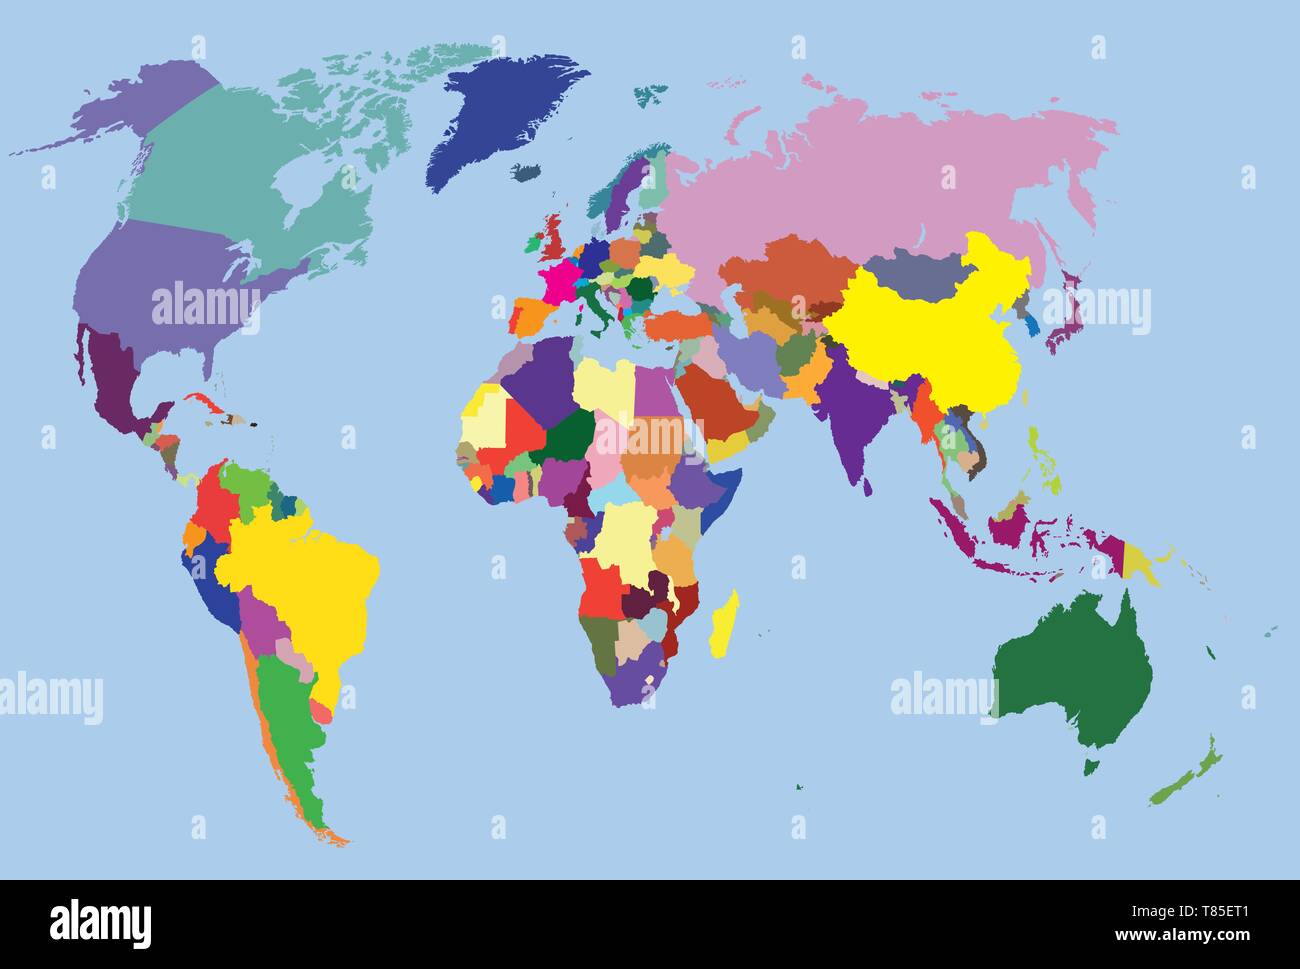 vector high detailed world map illustration Stock Vector